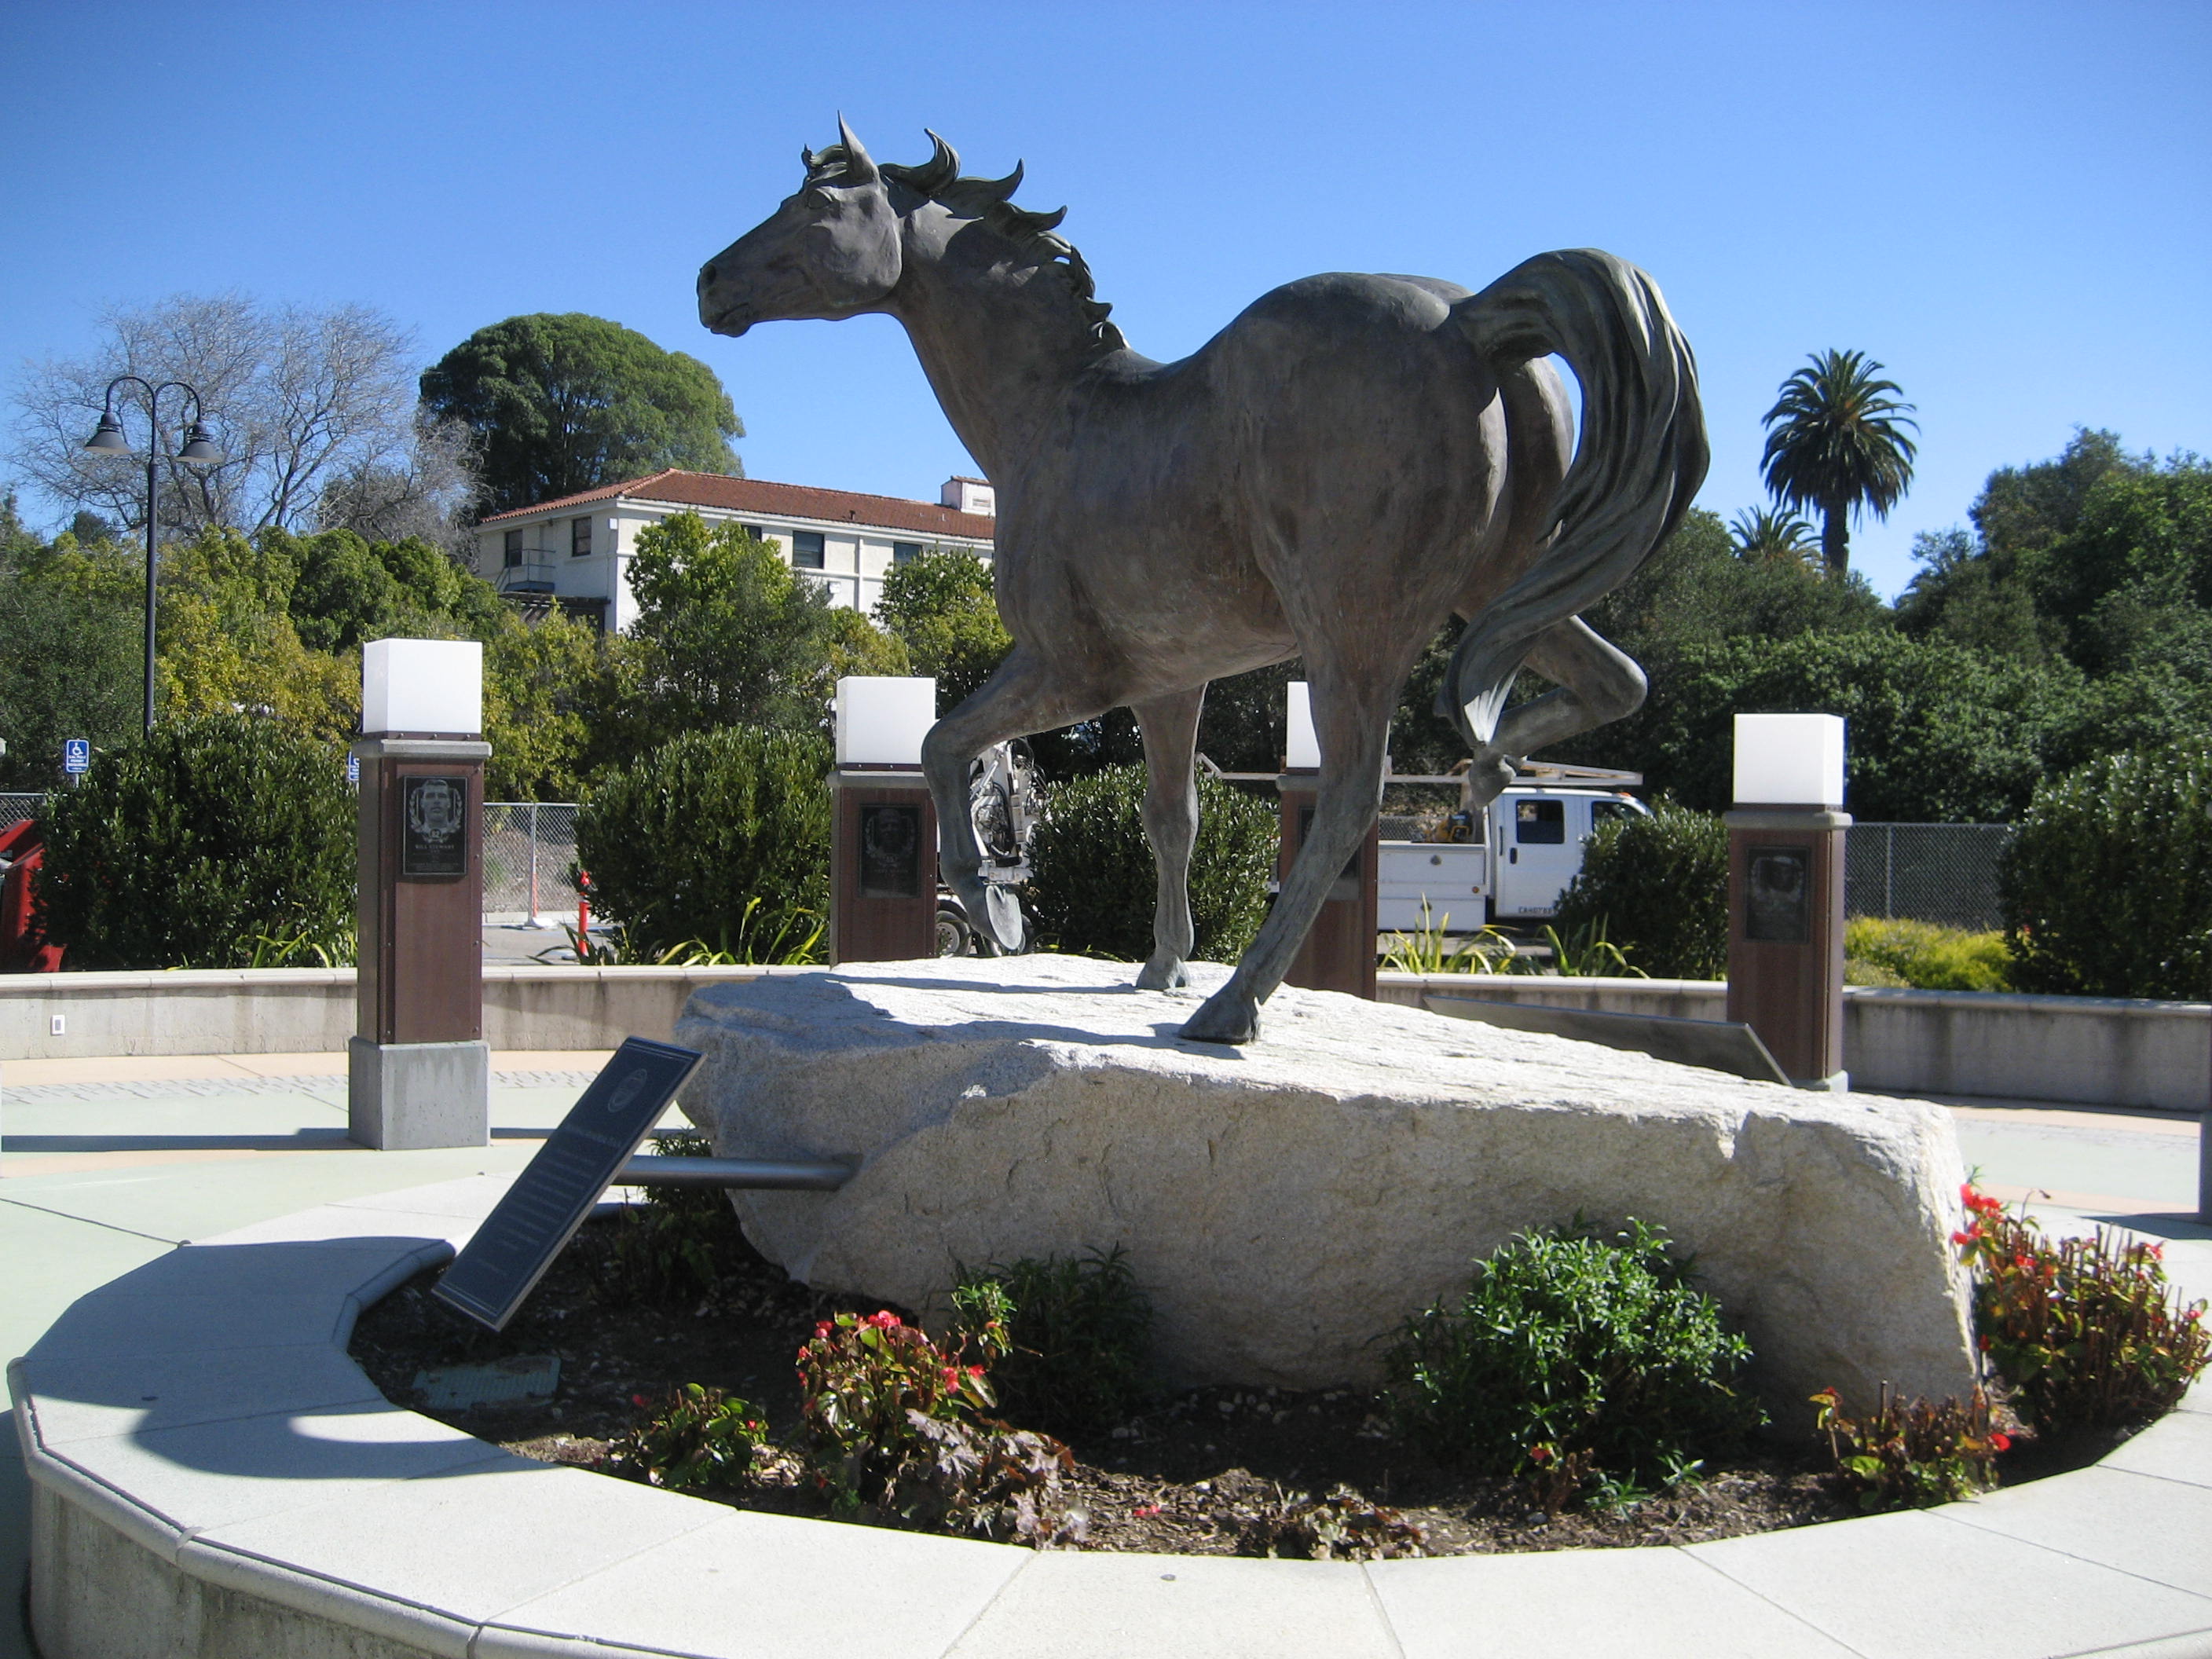 Cal Poly's mascot, a mustang horse